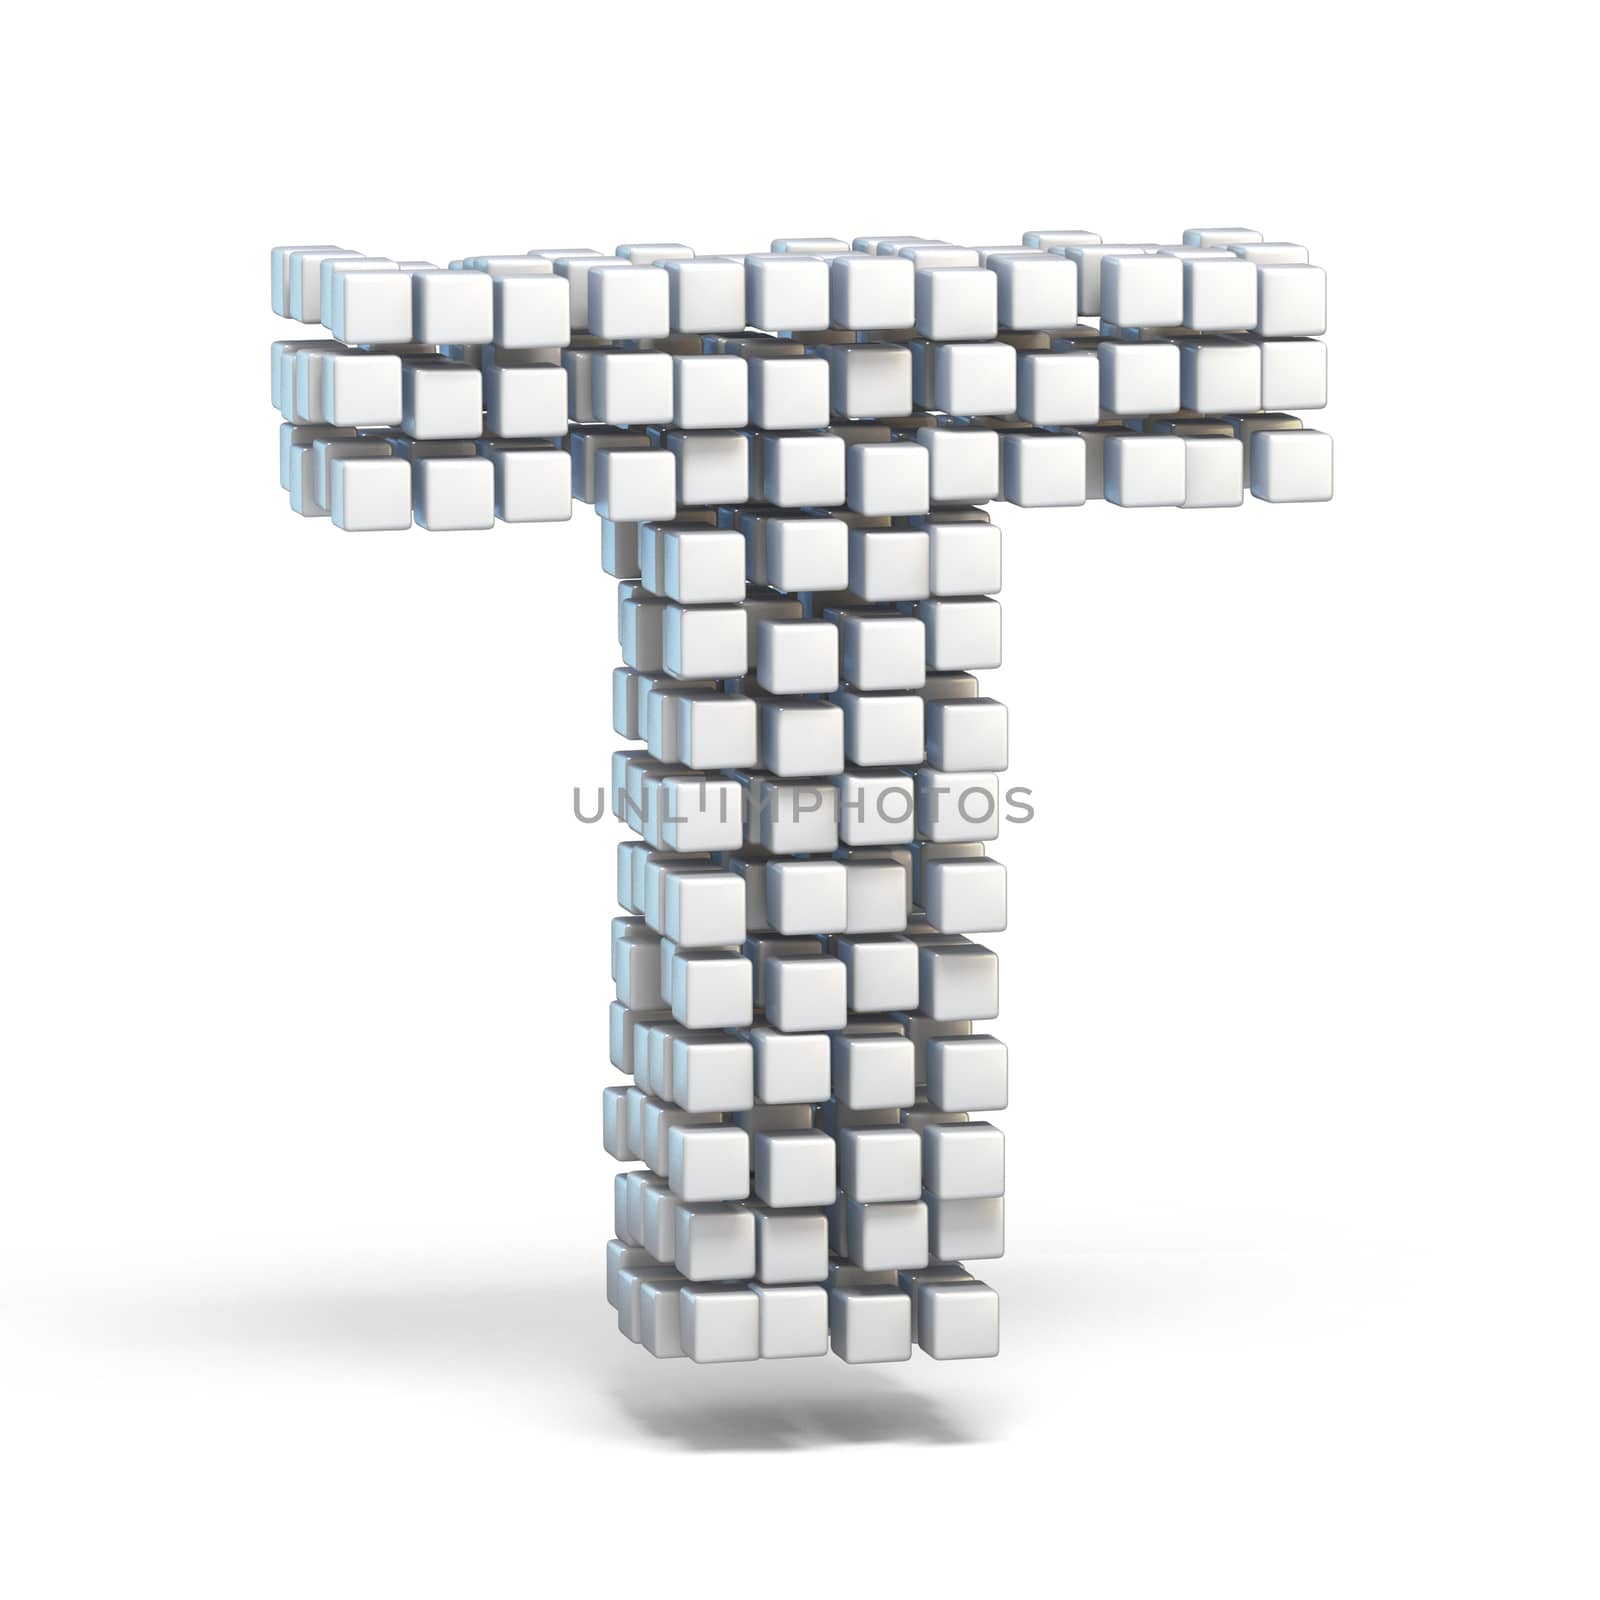 White voxel cubes font Letter T 3D render illustration isolated on white background